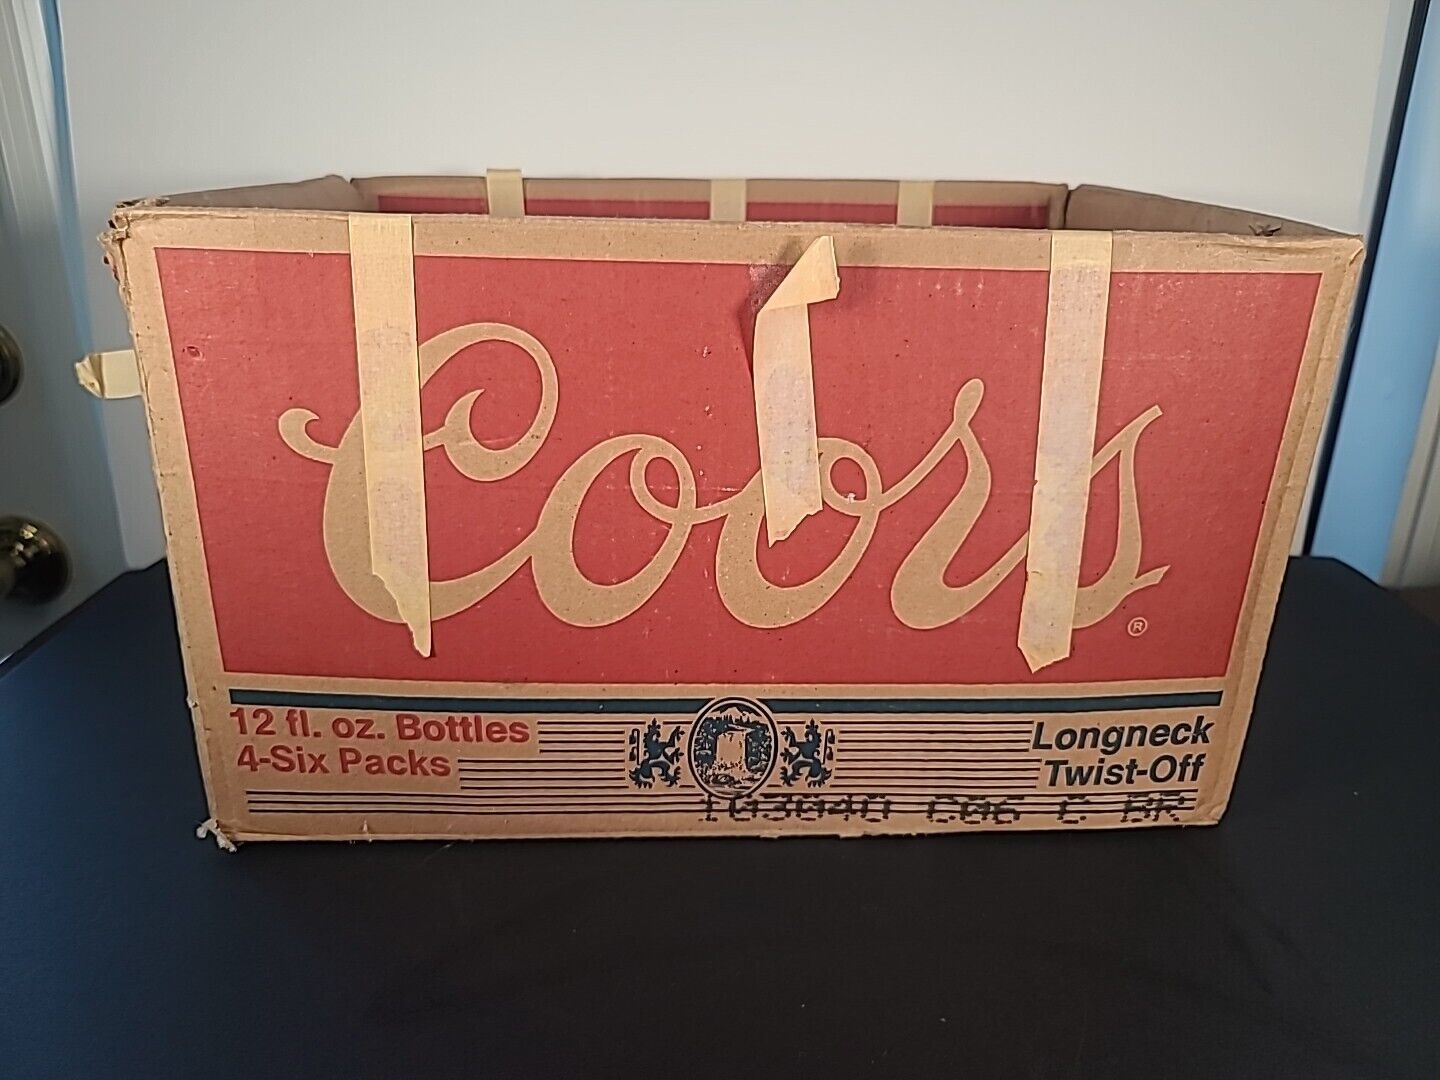 VINTAGE 1990's Coors Cardboard Box 4- Six Pack 12 oz Bottles Long Neck Twist-Off